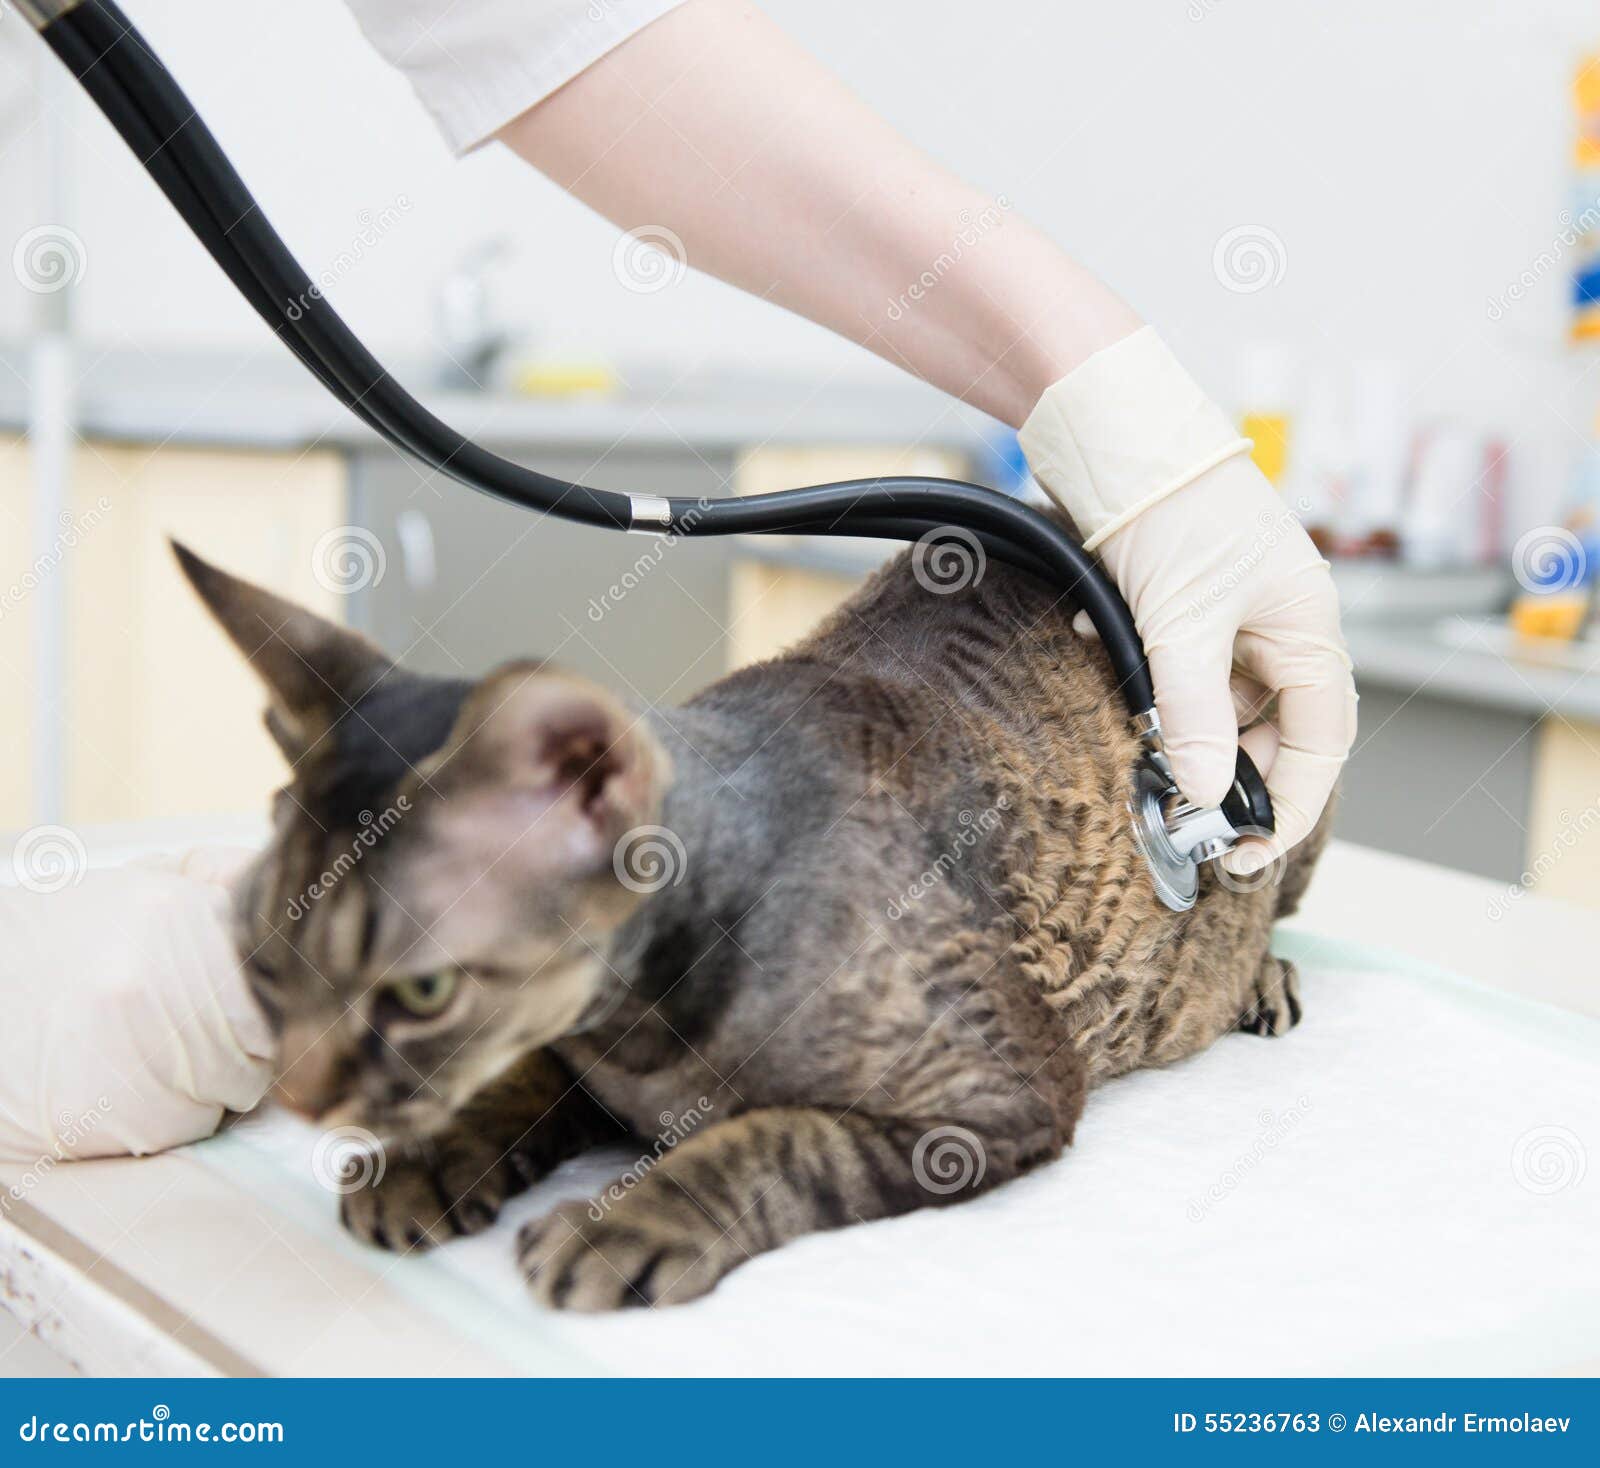 Veterinarian Hand Examining A Devon Rex Cat With Stethoscope Stock